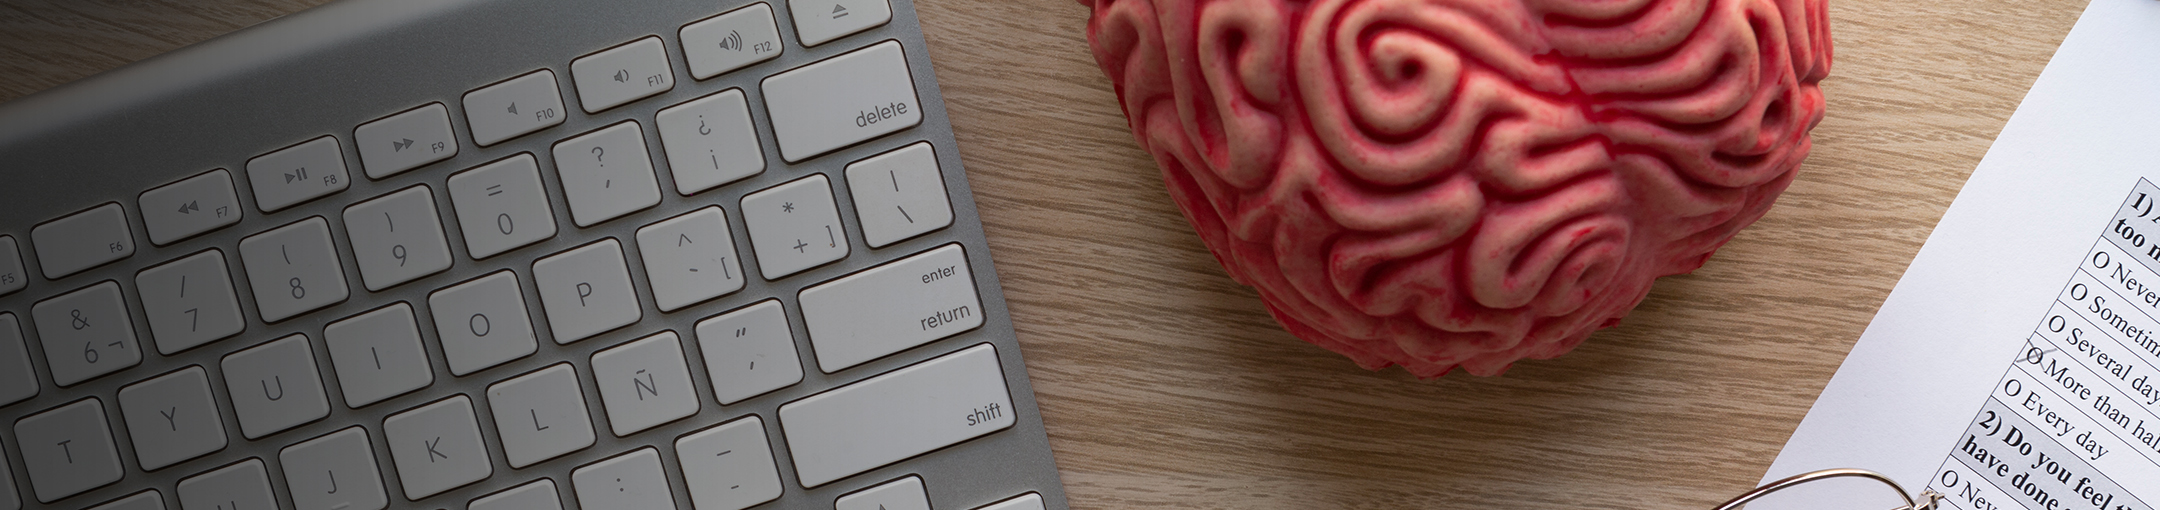 Keyboard and brain mock up